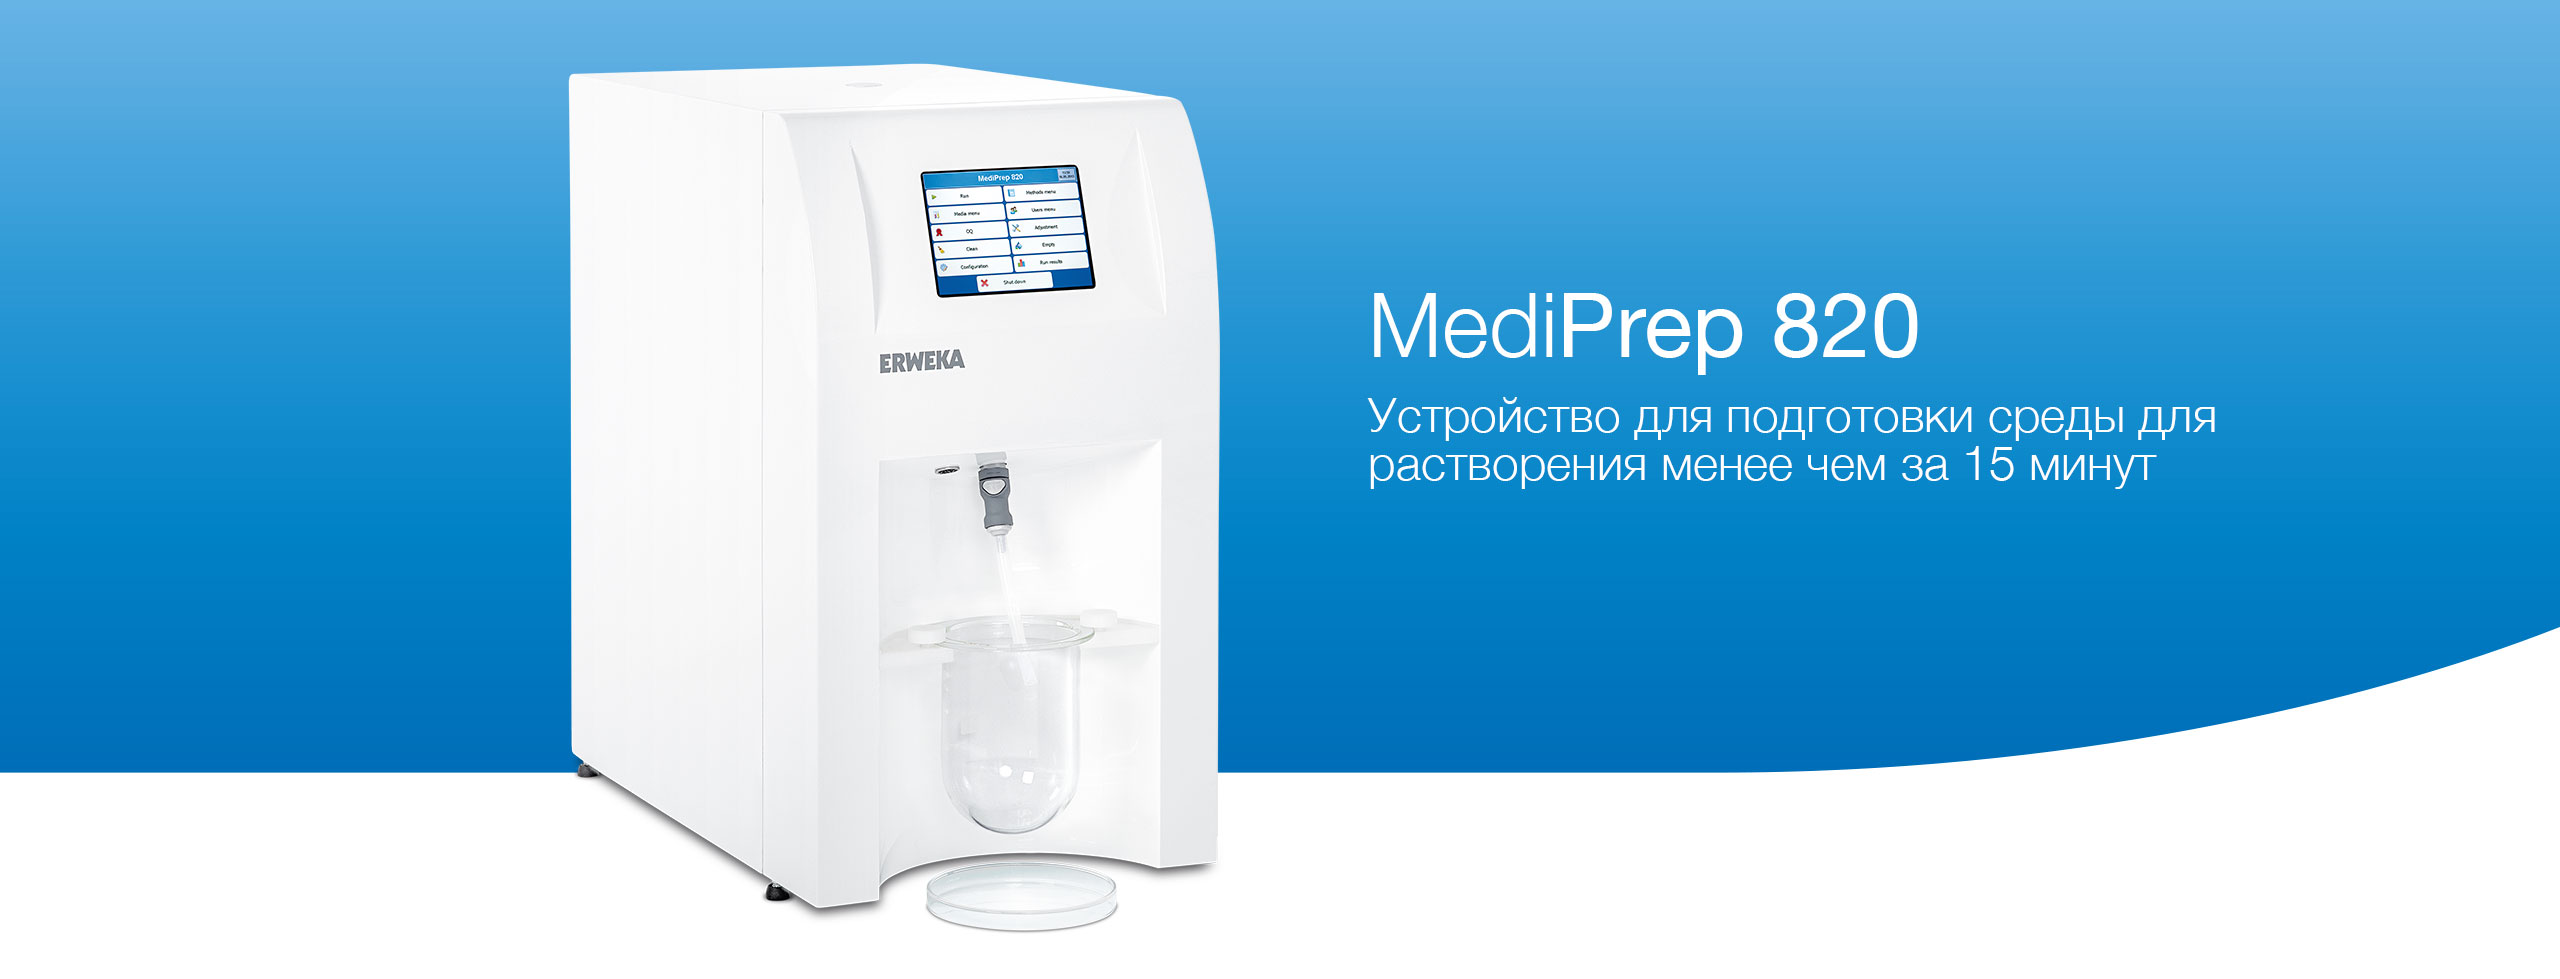 MediPrep 820 - Advanced media preparation in less then 15 minutes